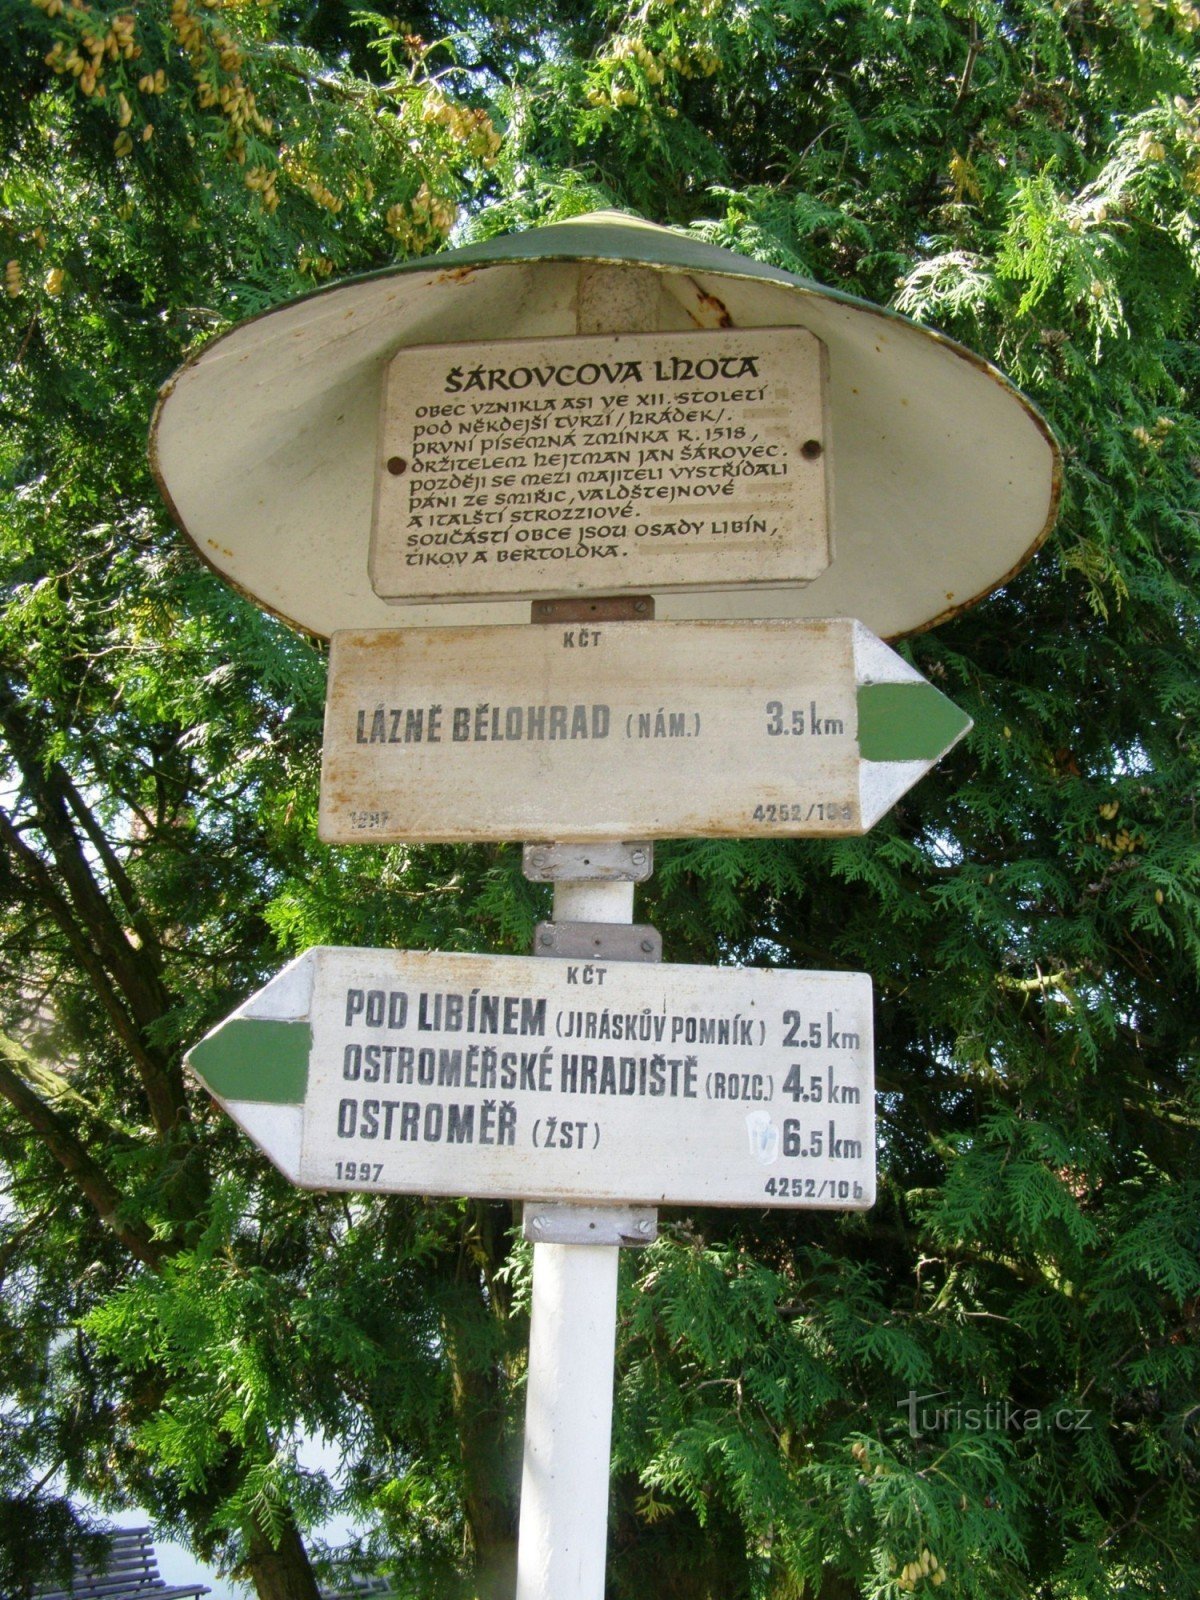 Šárovcova Lhotaの観光交差点